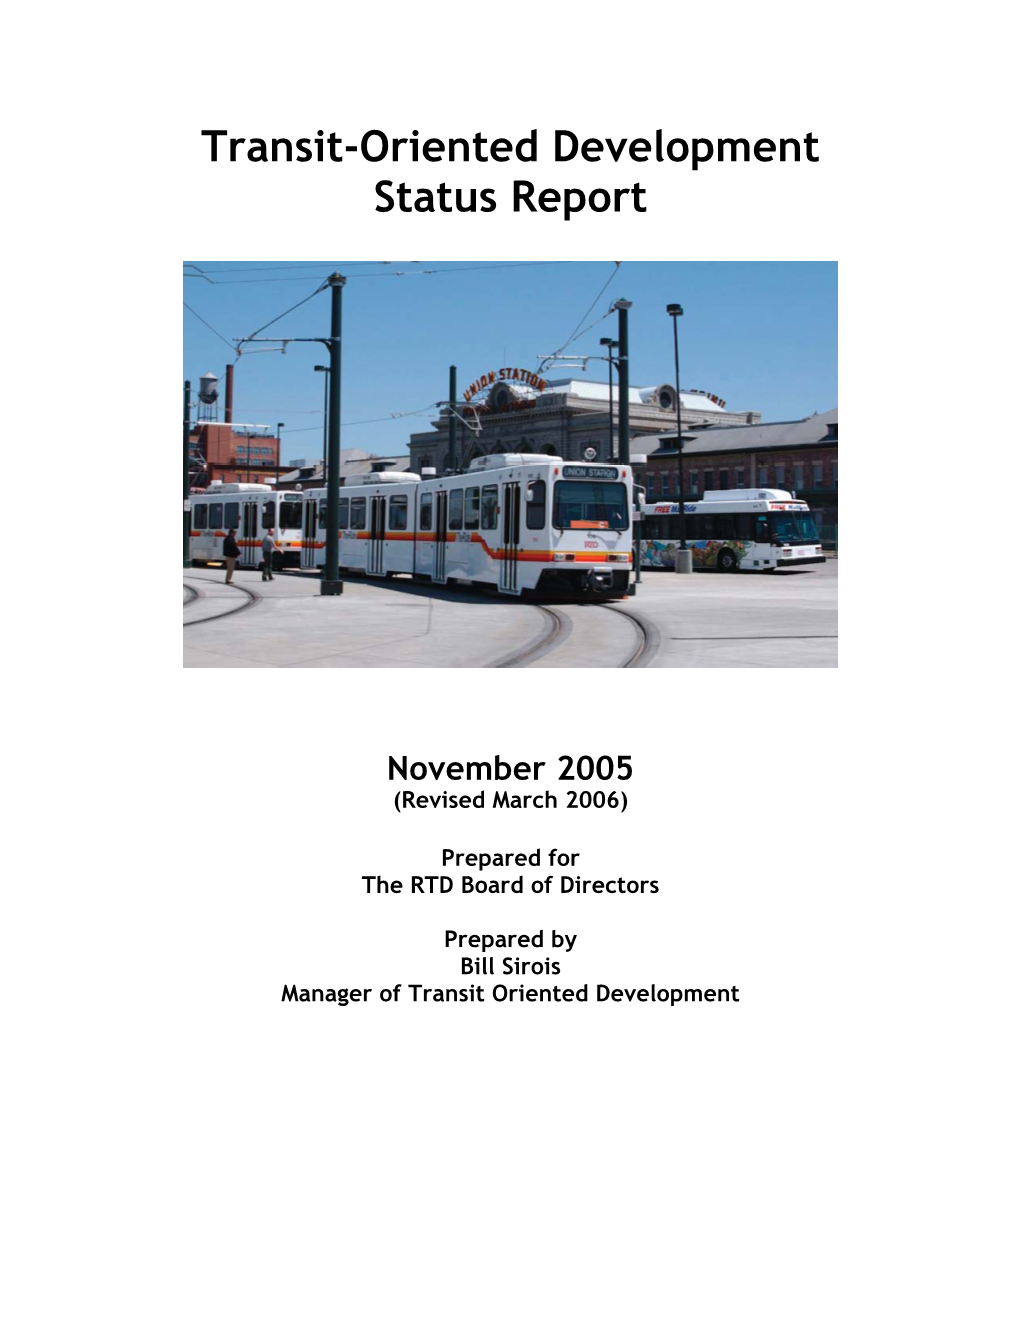 Transit-Oriented Development Status Report